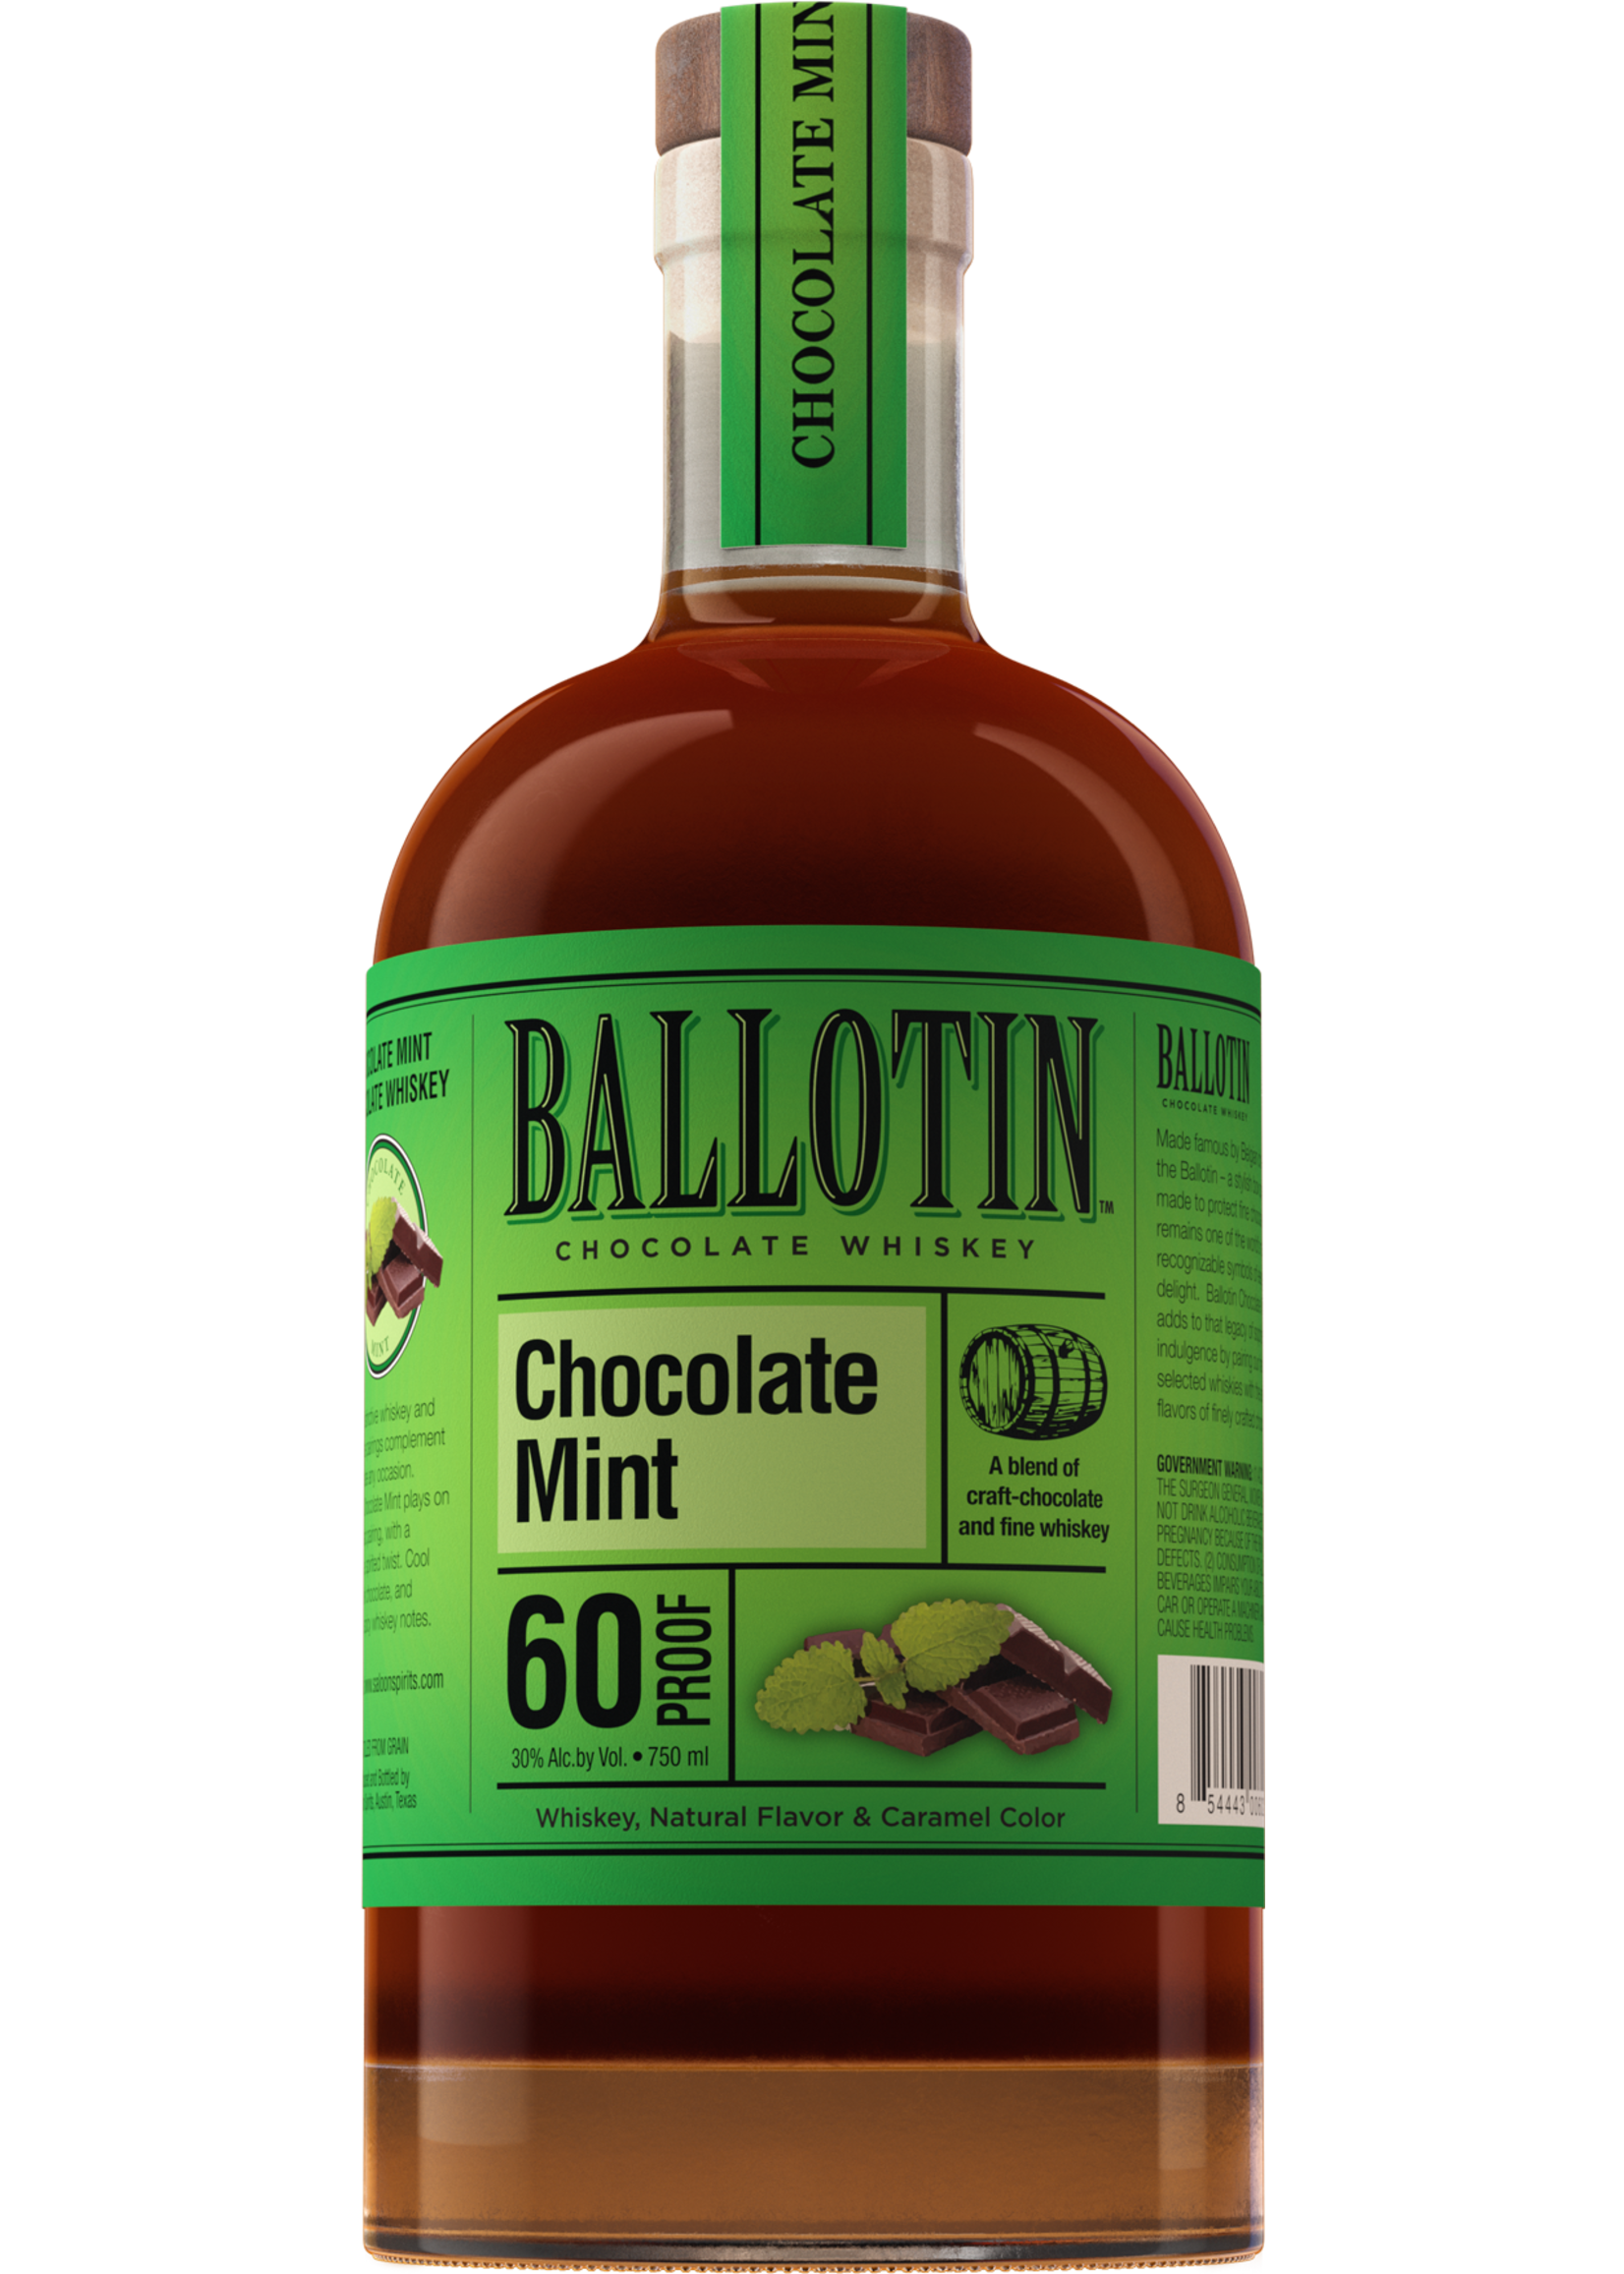 Ballotin Chocolate Mint Whiskey 60Proof 750ml